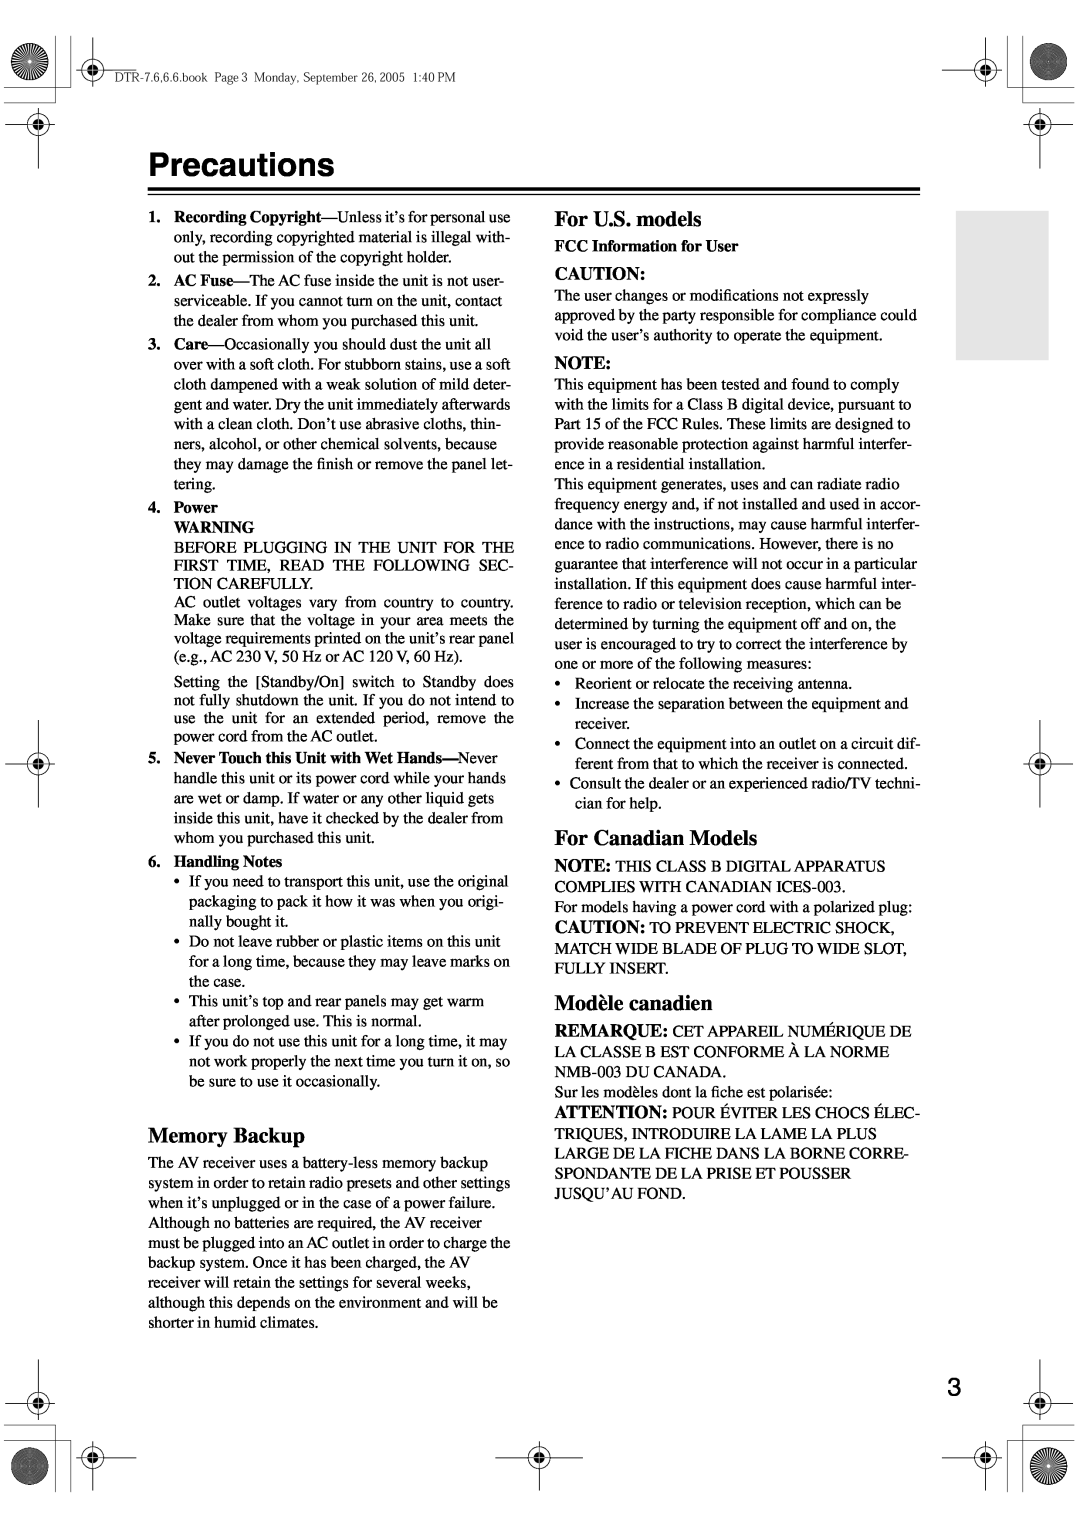 Integra DTR-7.6/6.6 Precautions, Power, Handling Notes, For U.S. models, Memory Backup, For Canadian Models 